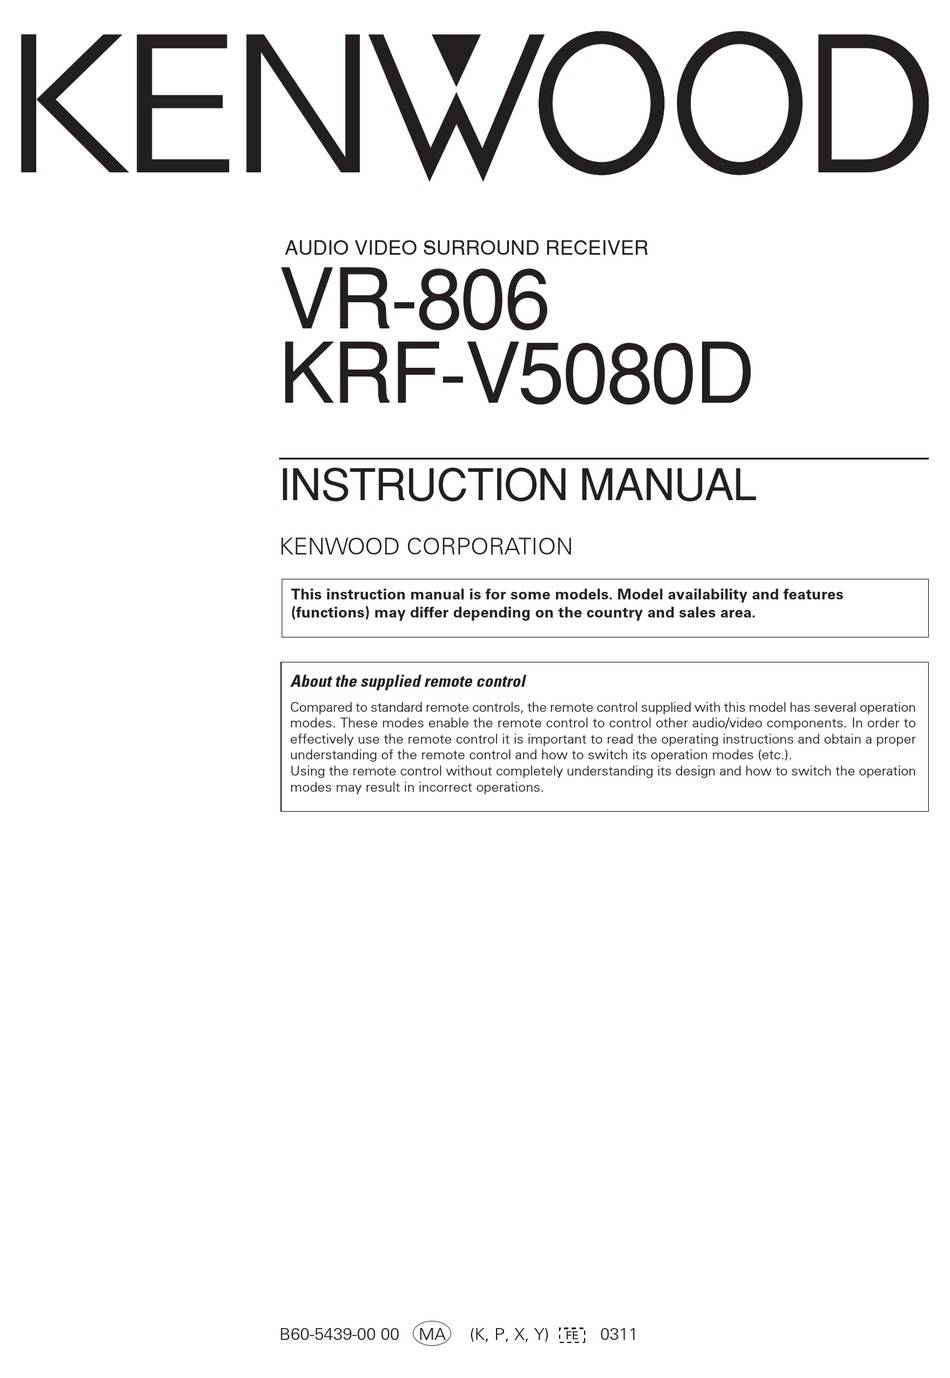 Kenwood KRF-V5080D